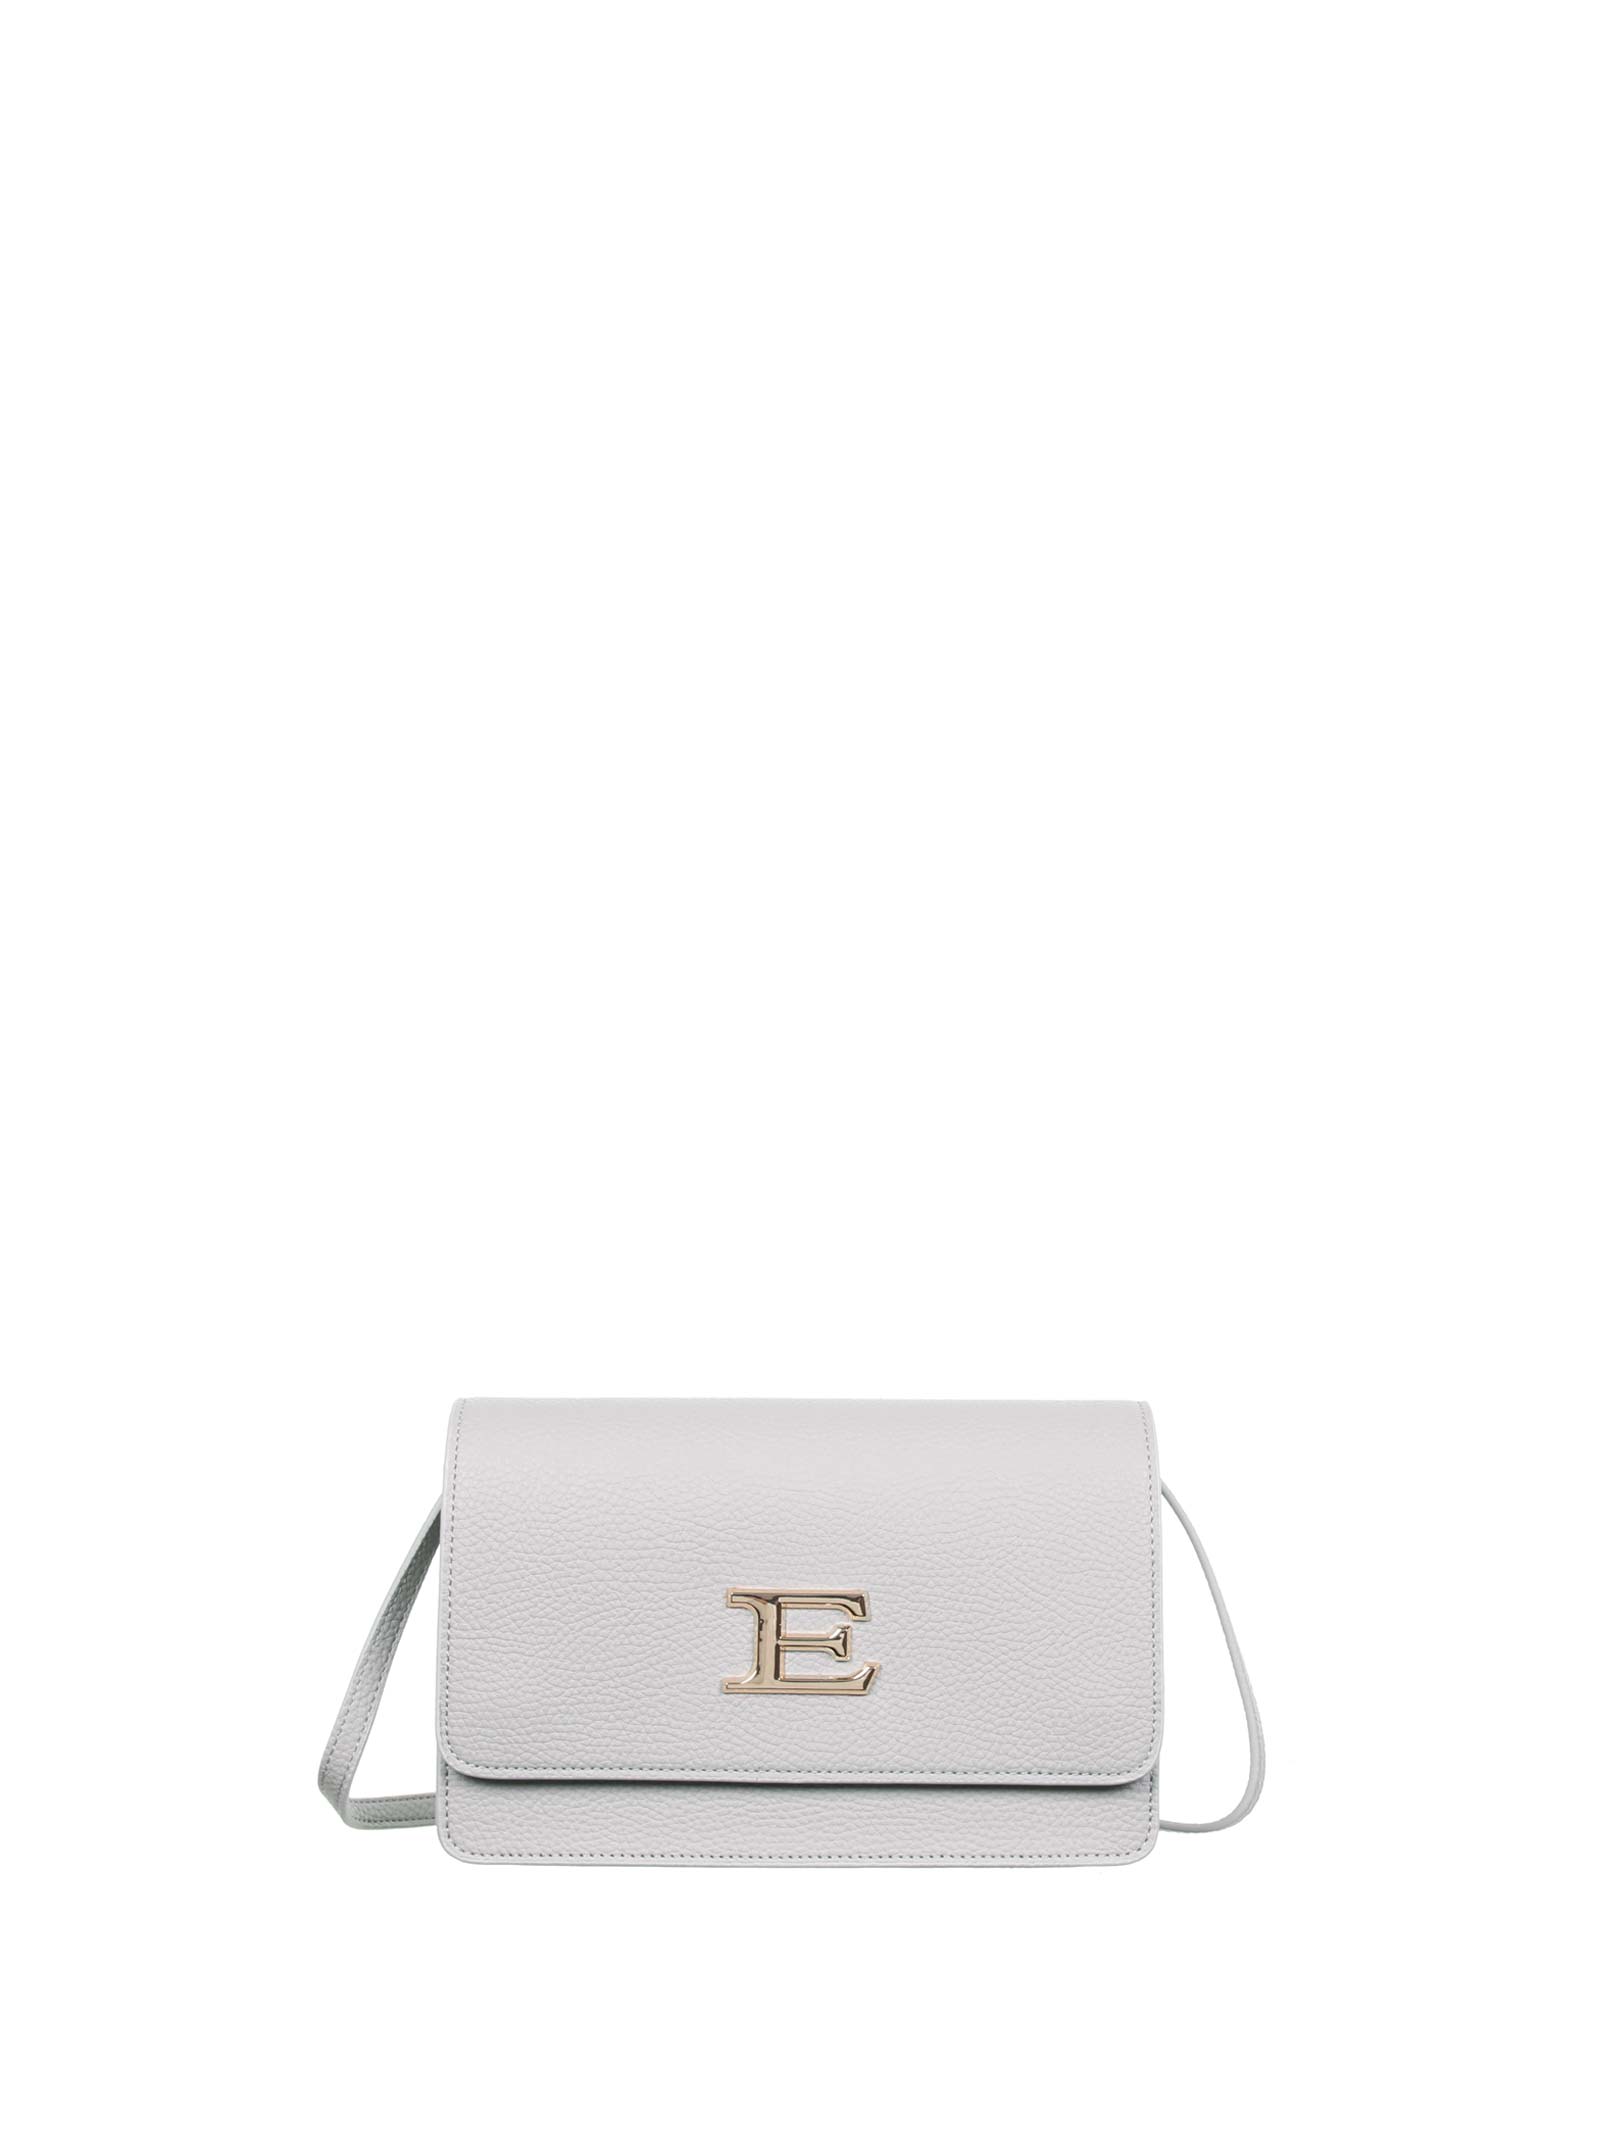 Ermanno Scervino Eba White Cream Shoulder Bag